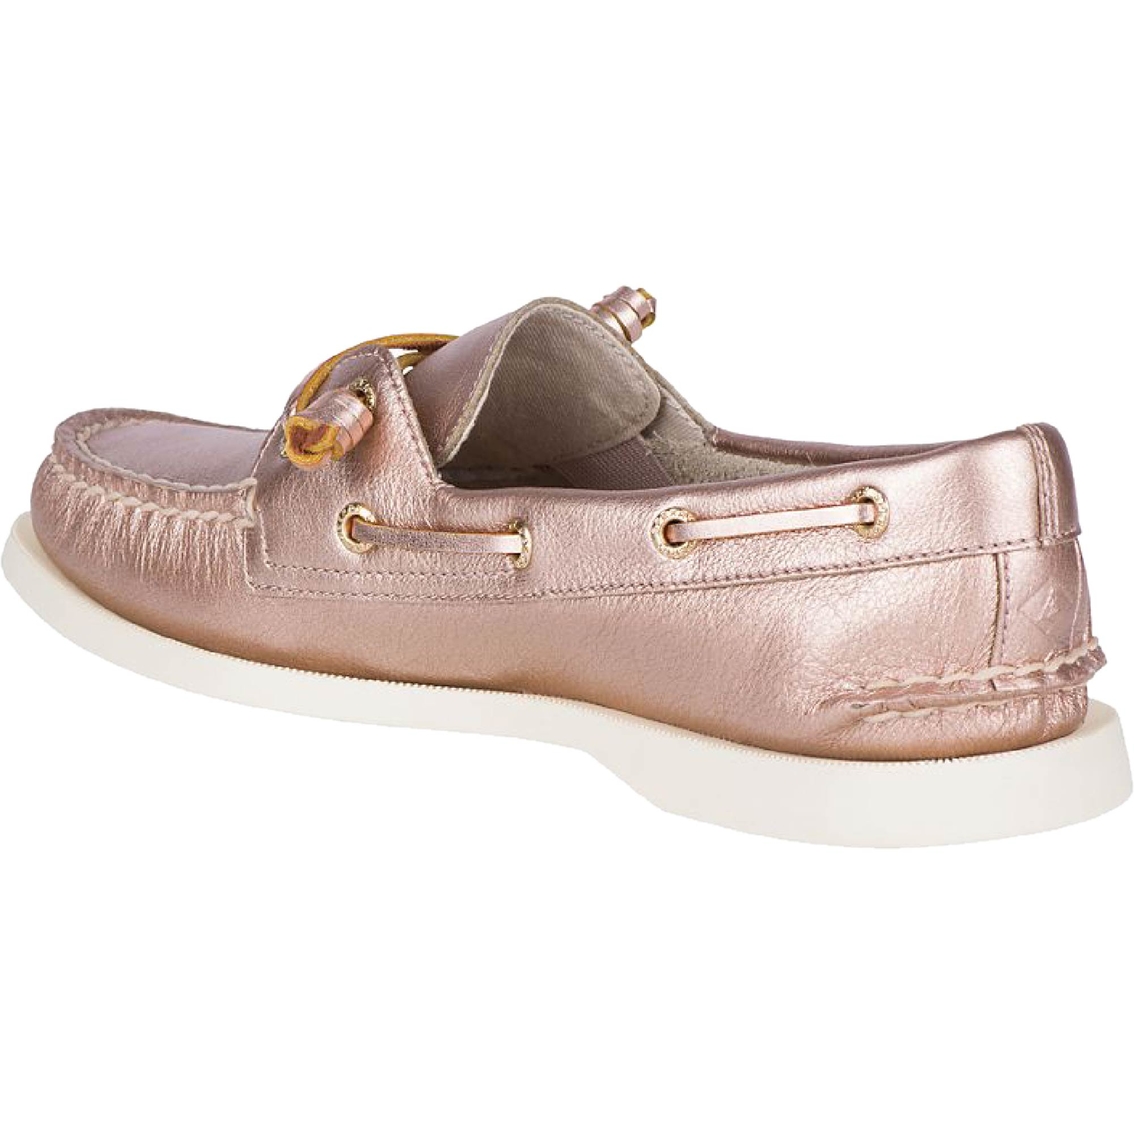 Sperry Women's Authentic Original Vida Metallic Boat Shoes - Image 4 of 6